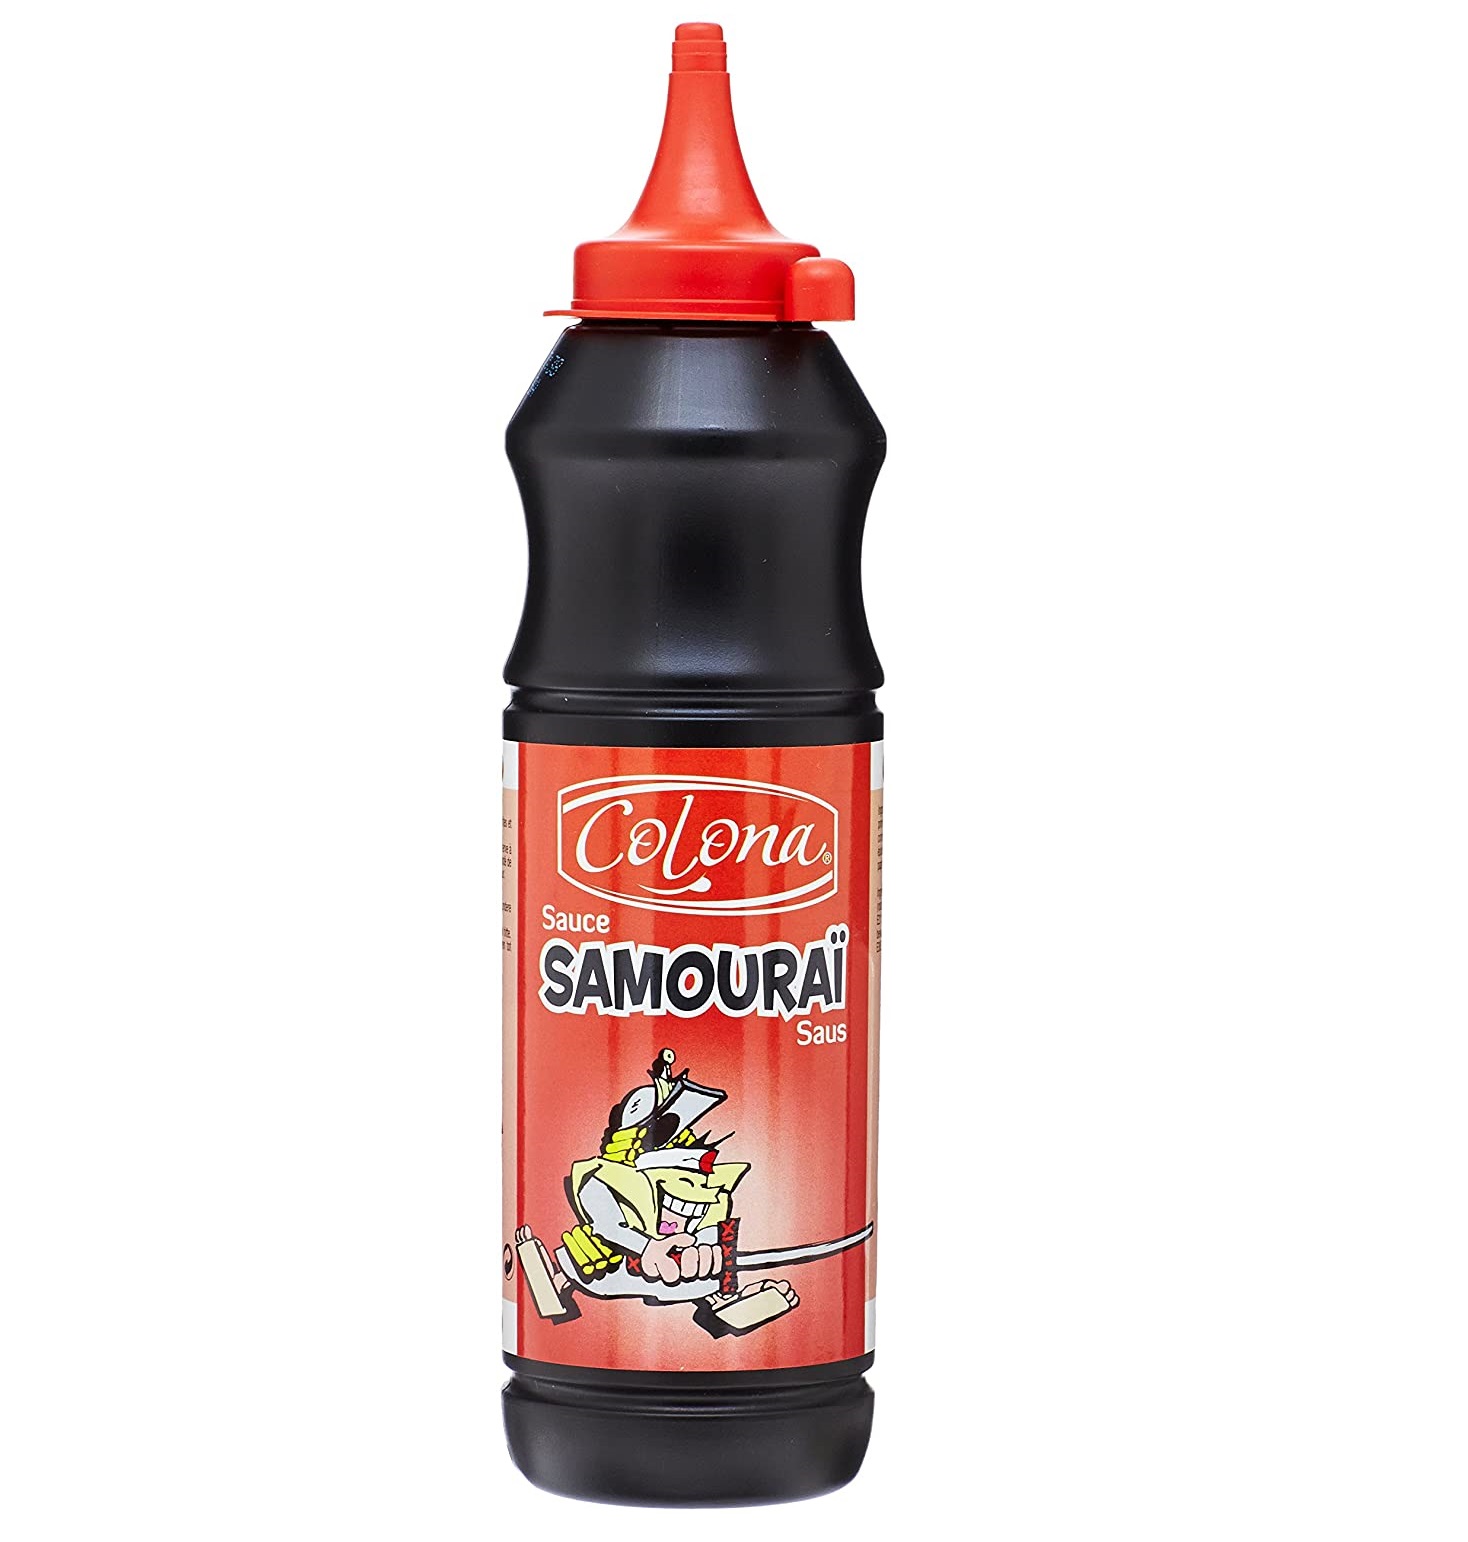 Colona Sauce Samurai 500ml